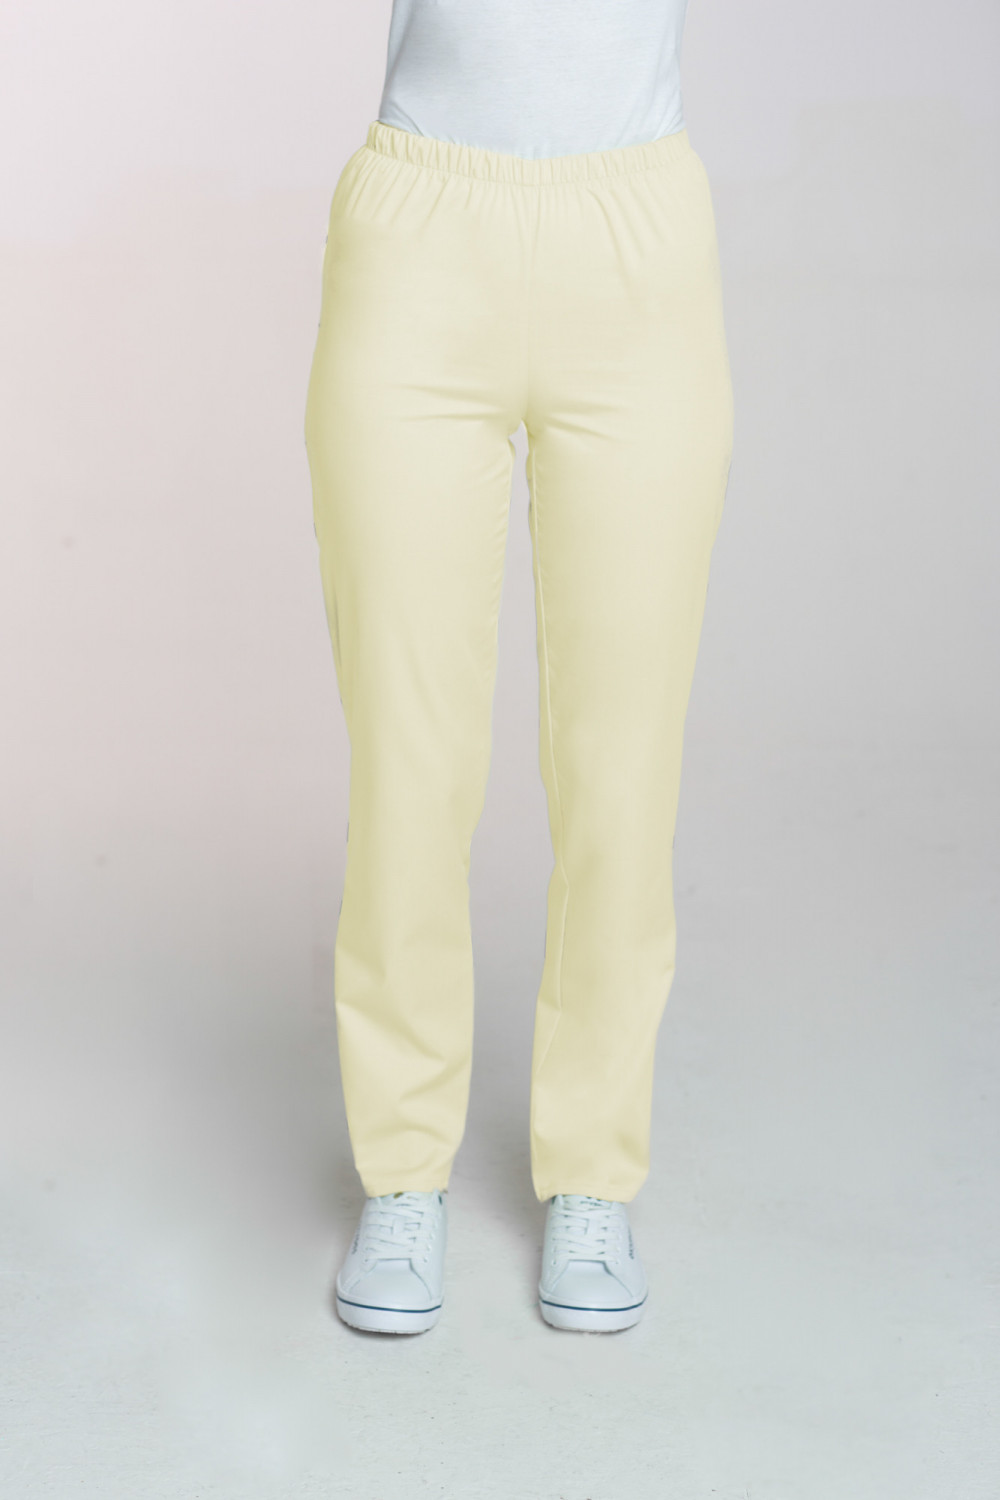 M-086 Spodnie damskie medyczne spodnie do pracy kolor banan